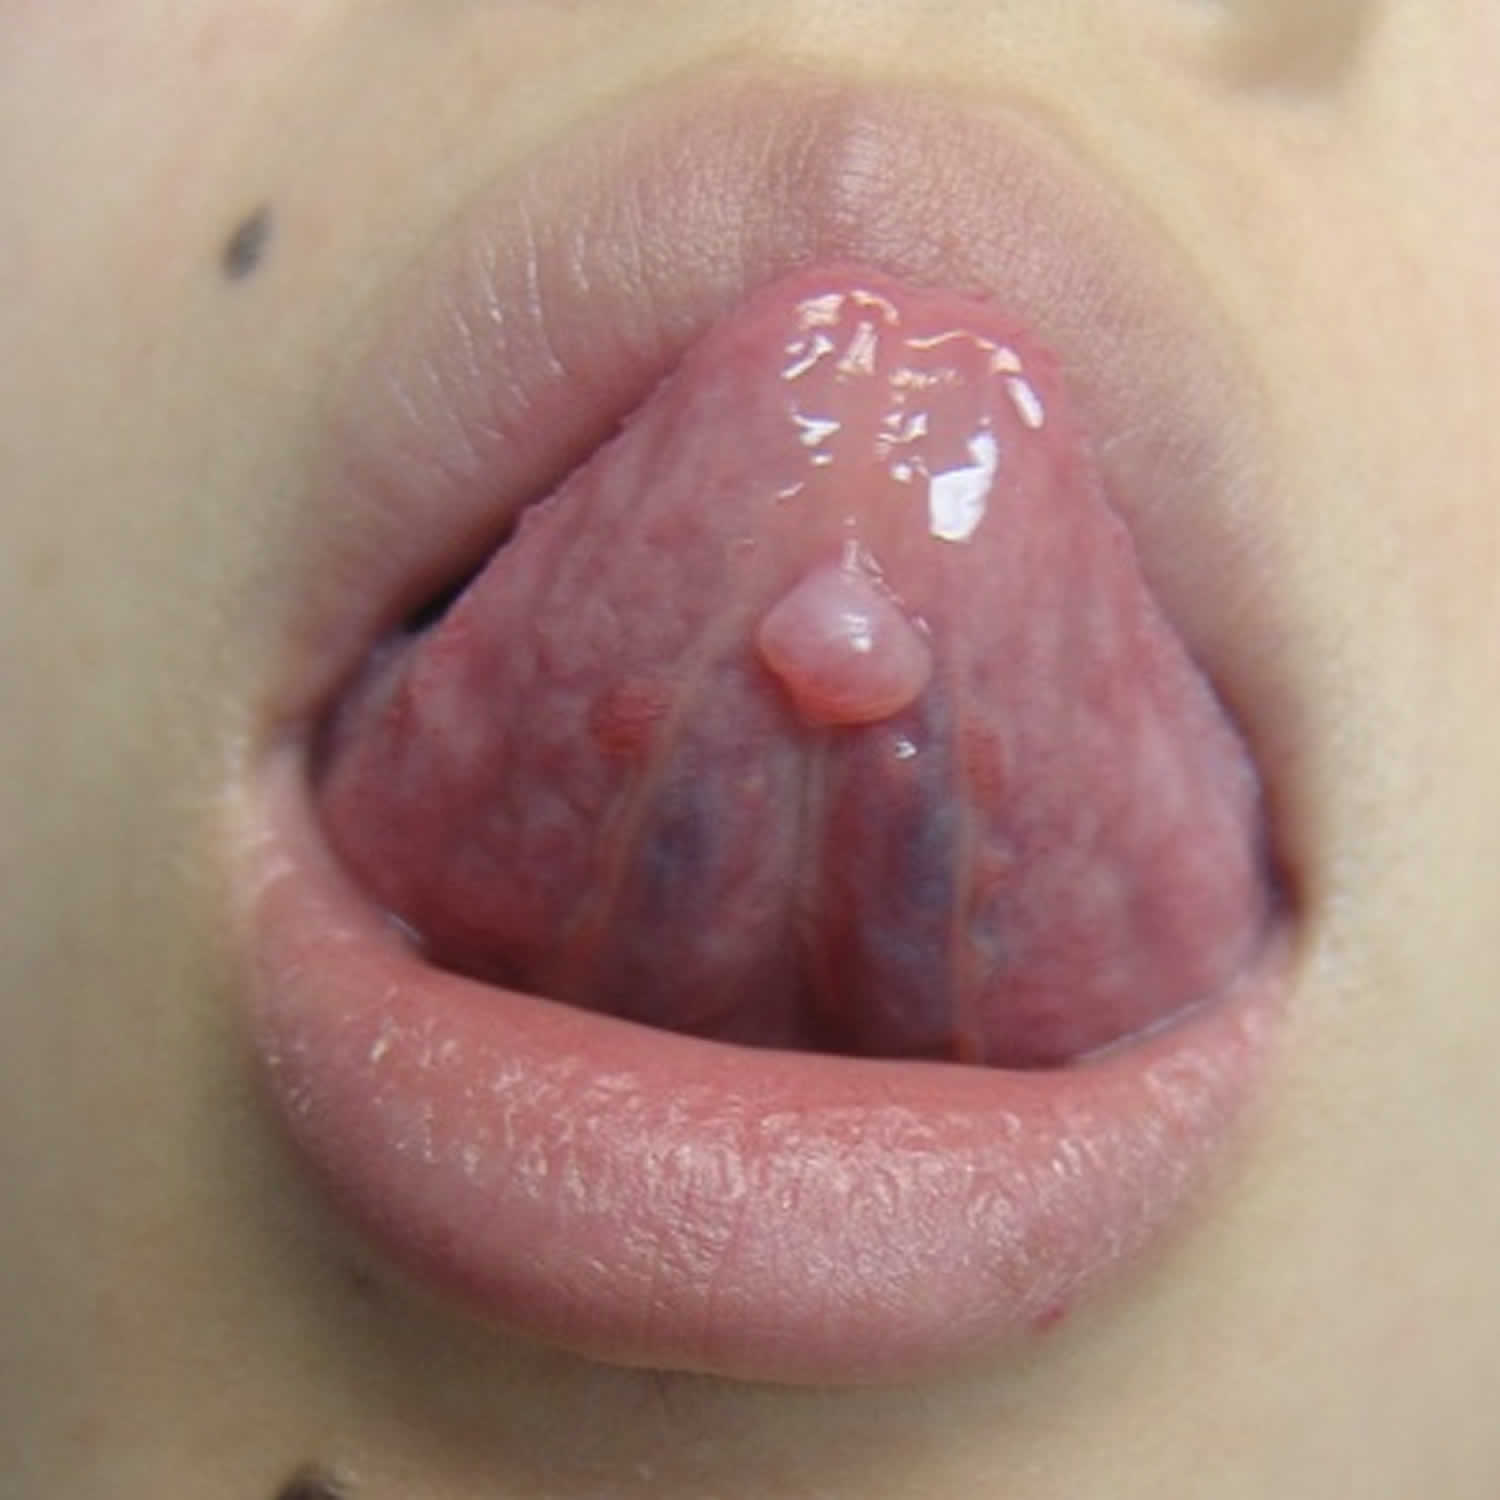 On clear lip bump Mucocele: Diagnosis,